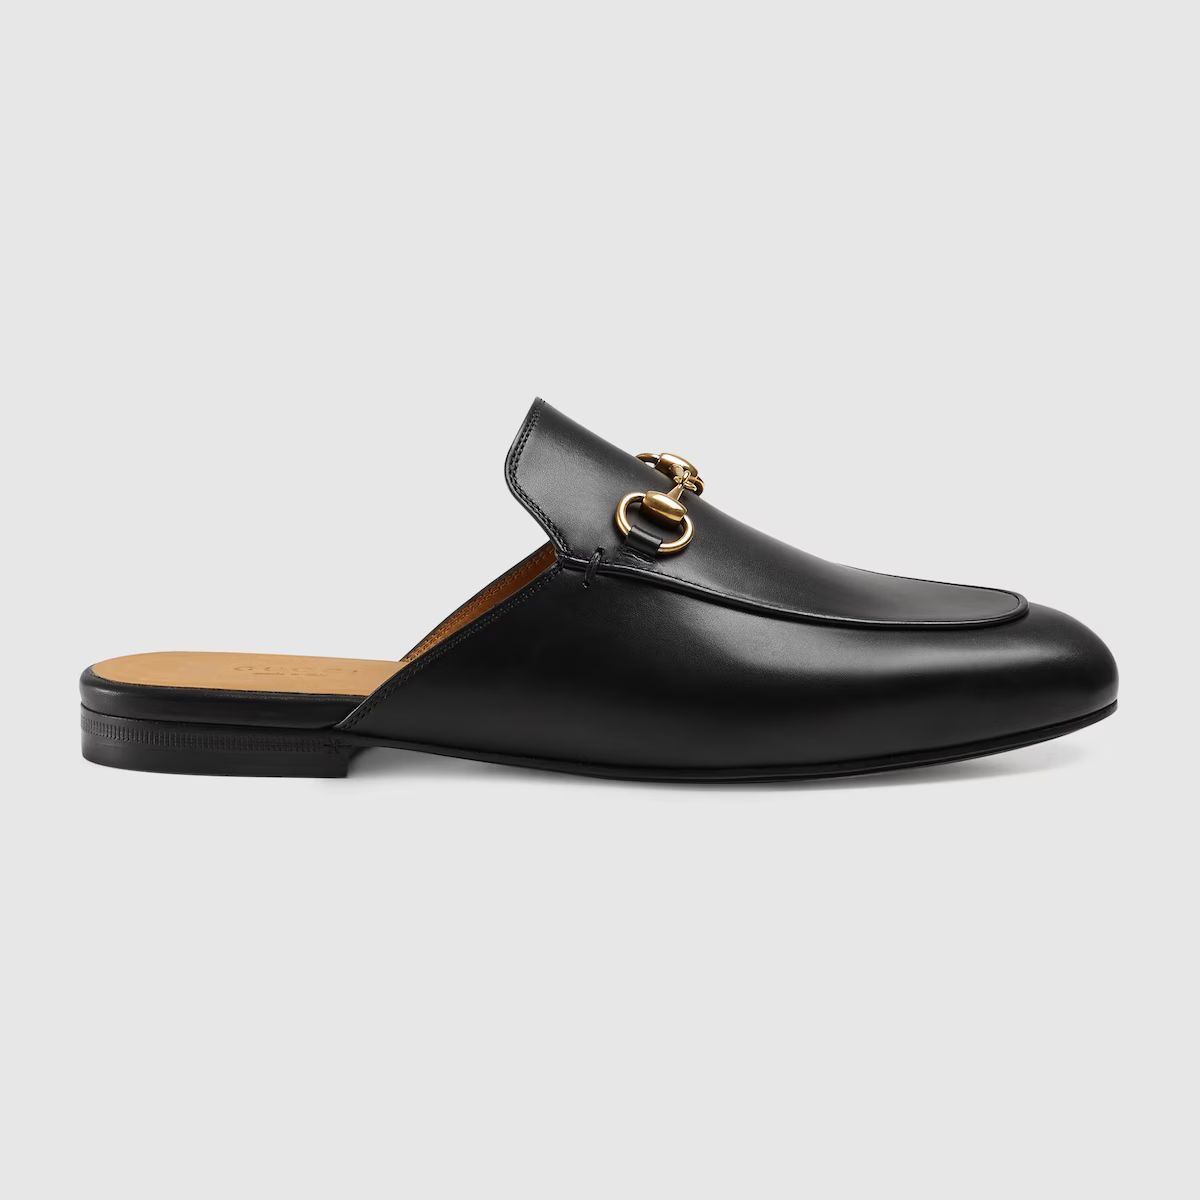 Gucci Princetown leather slipper | Gucci (US)